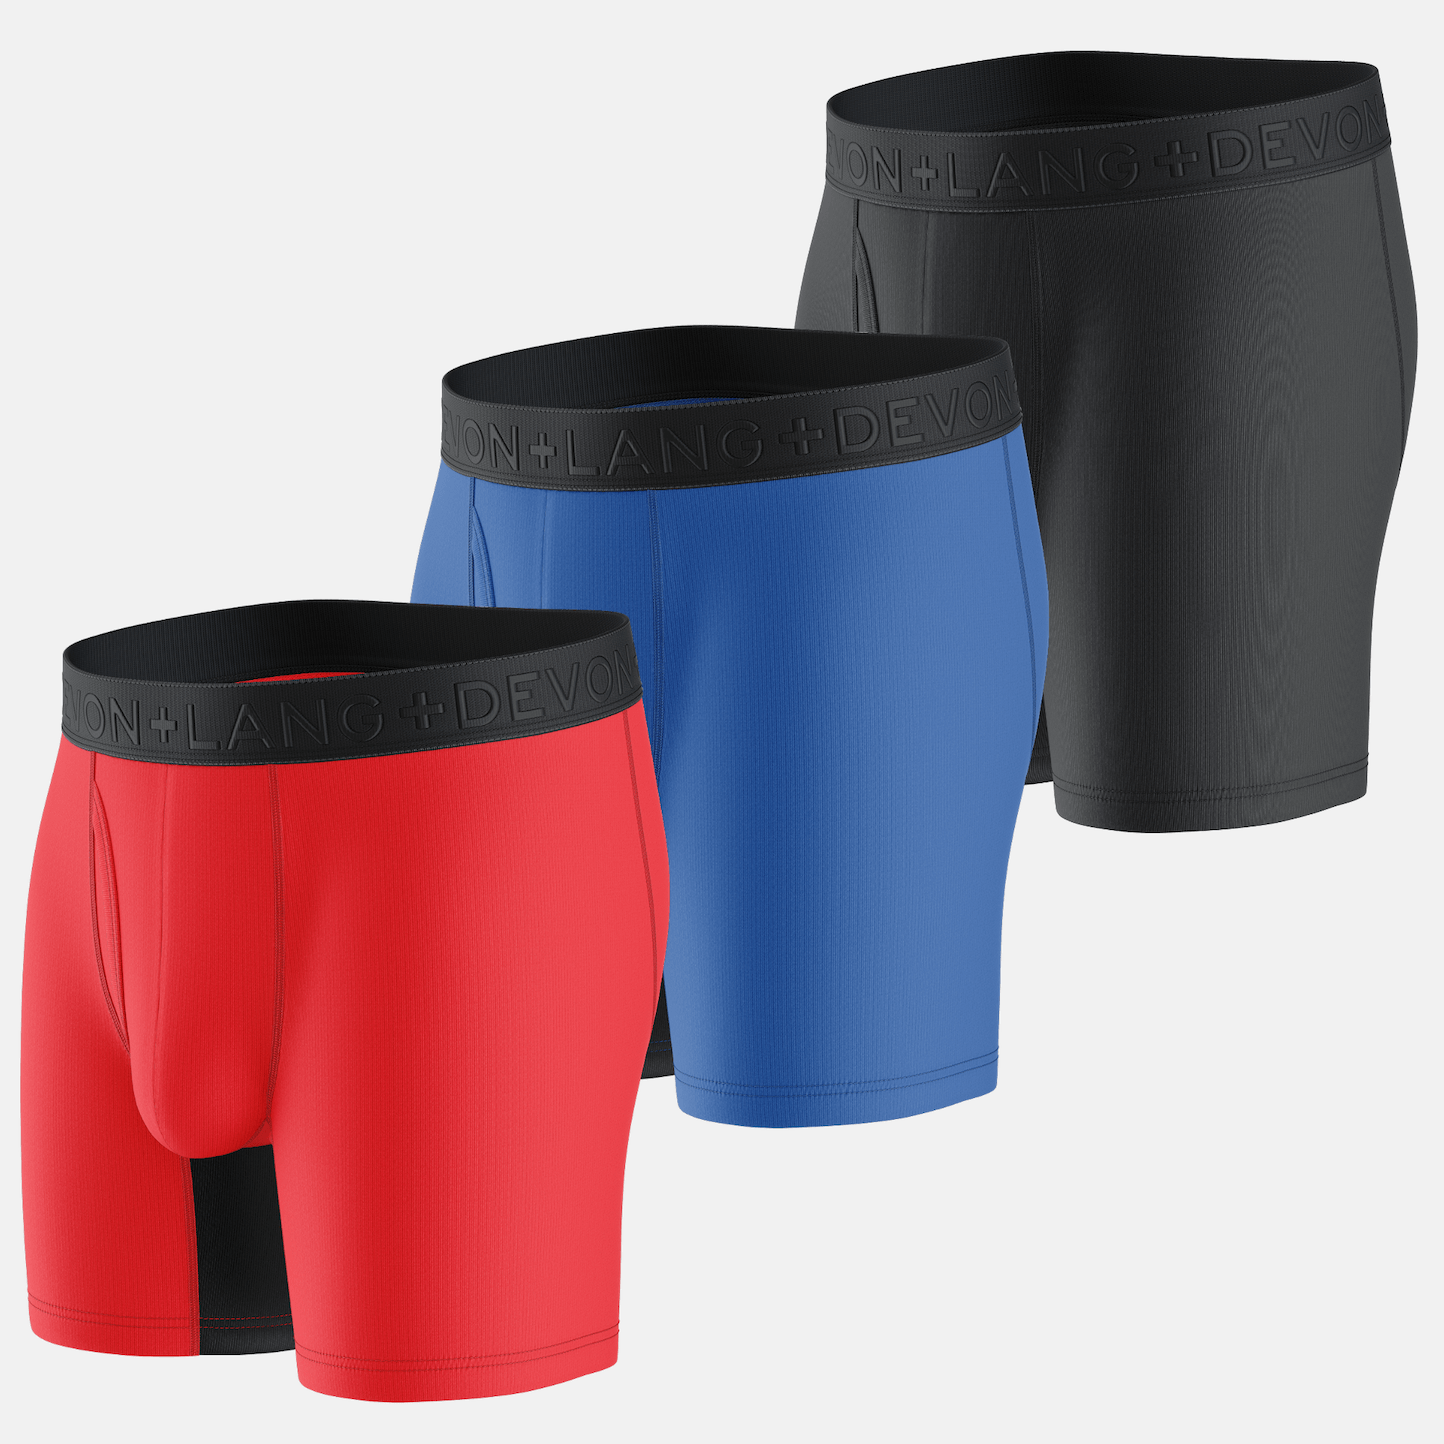 Journey Boxer Brief - Multi-Packs - Blue/Black/Red